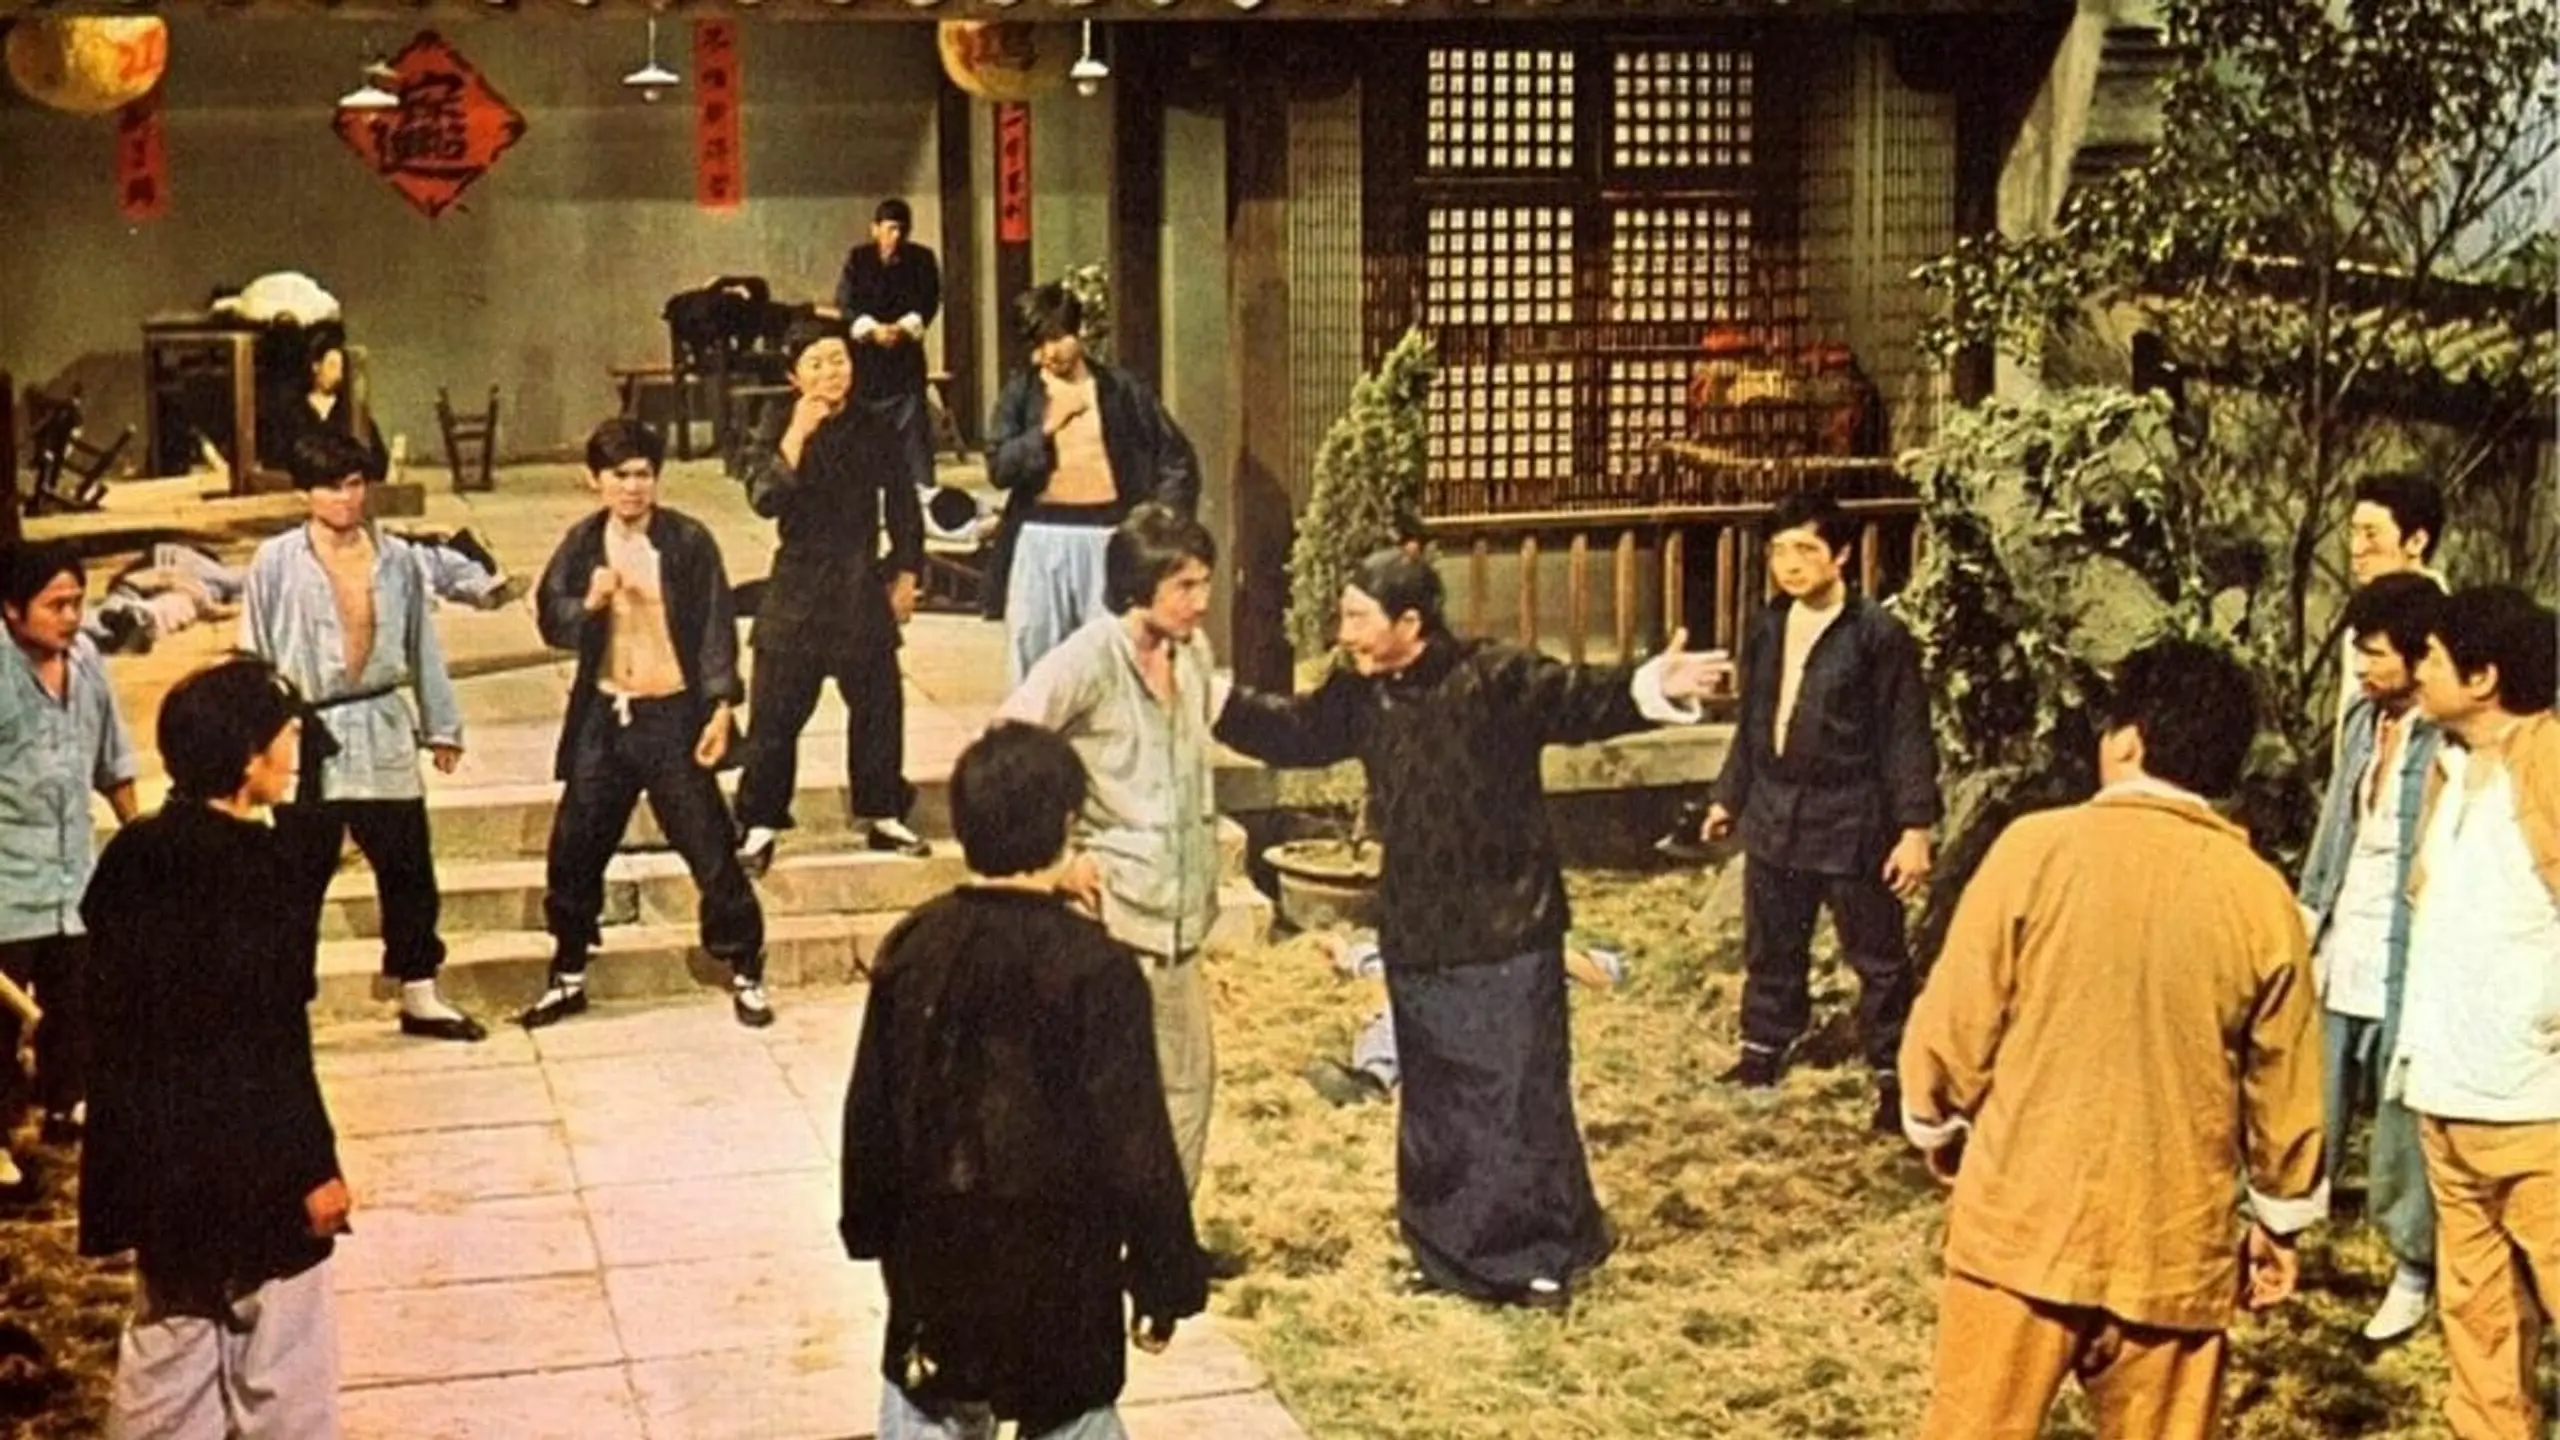 Kwan Fu III - Die Bande der Tigerkralle